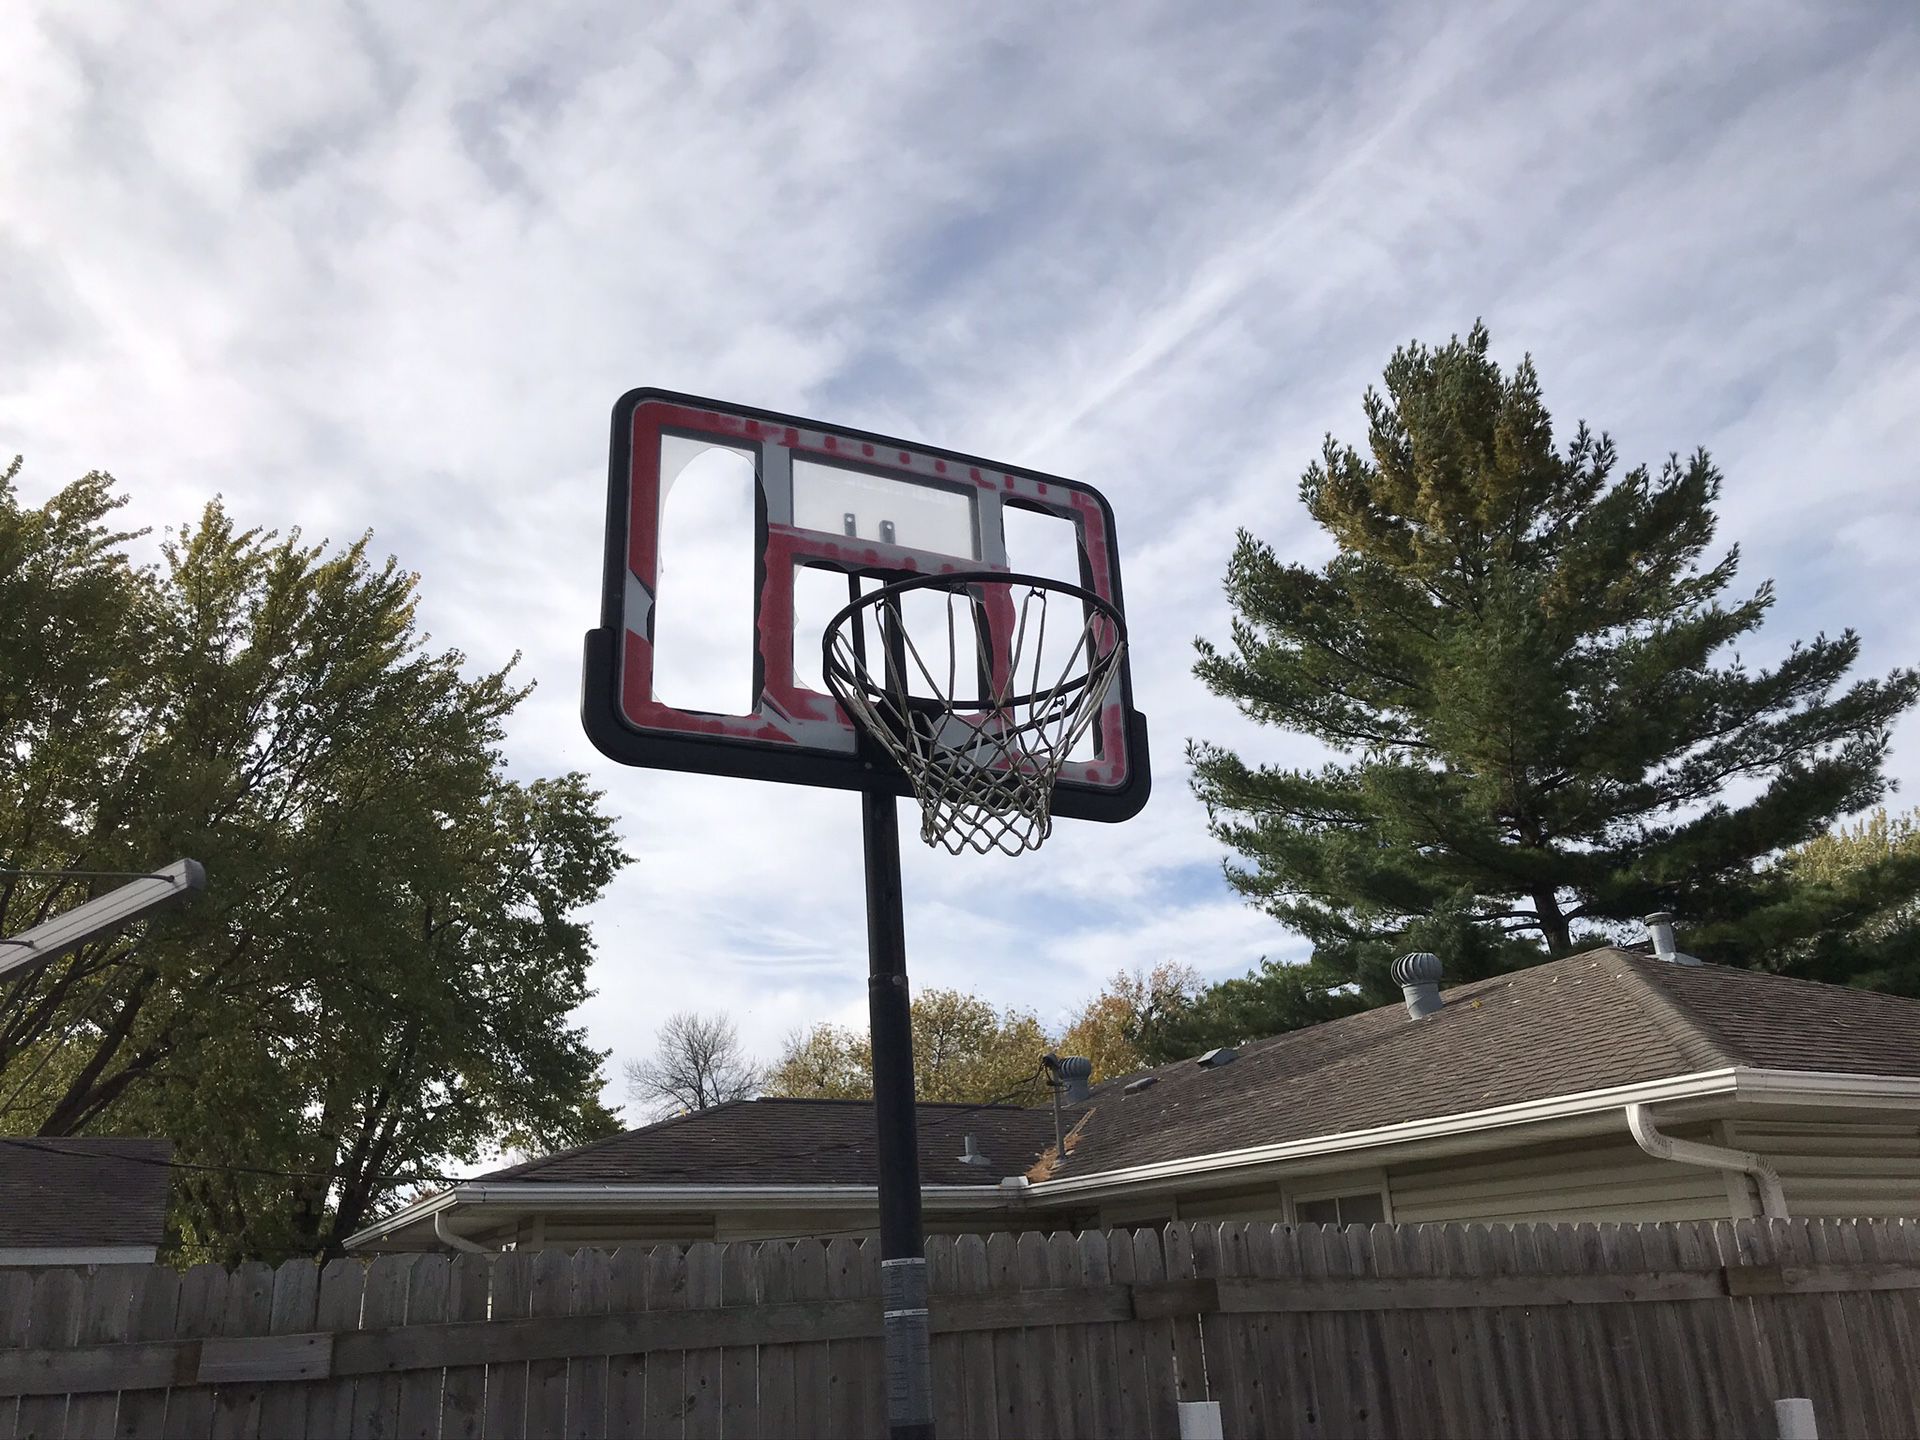 Basket ball hoop